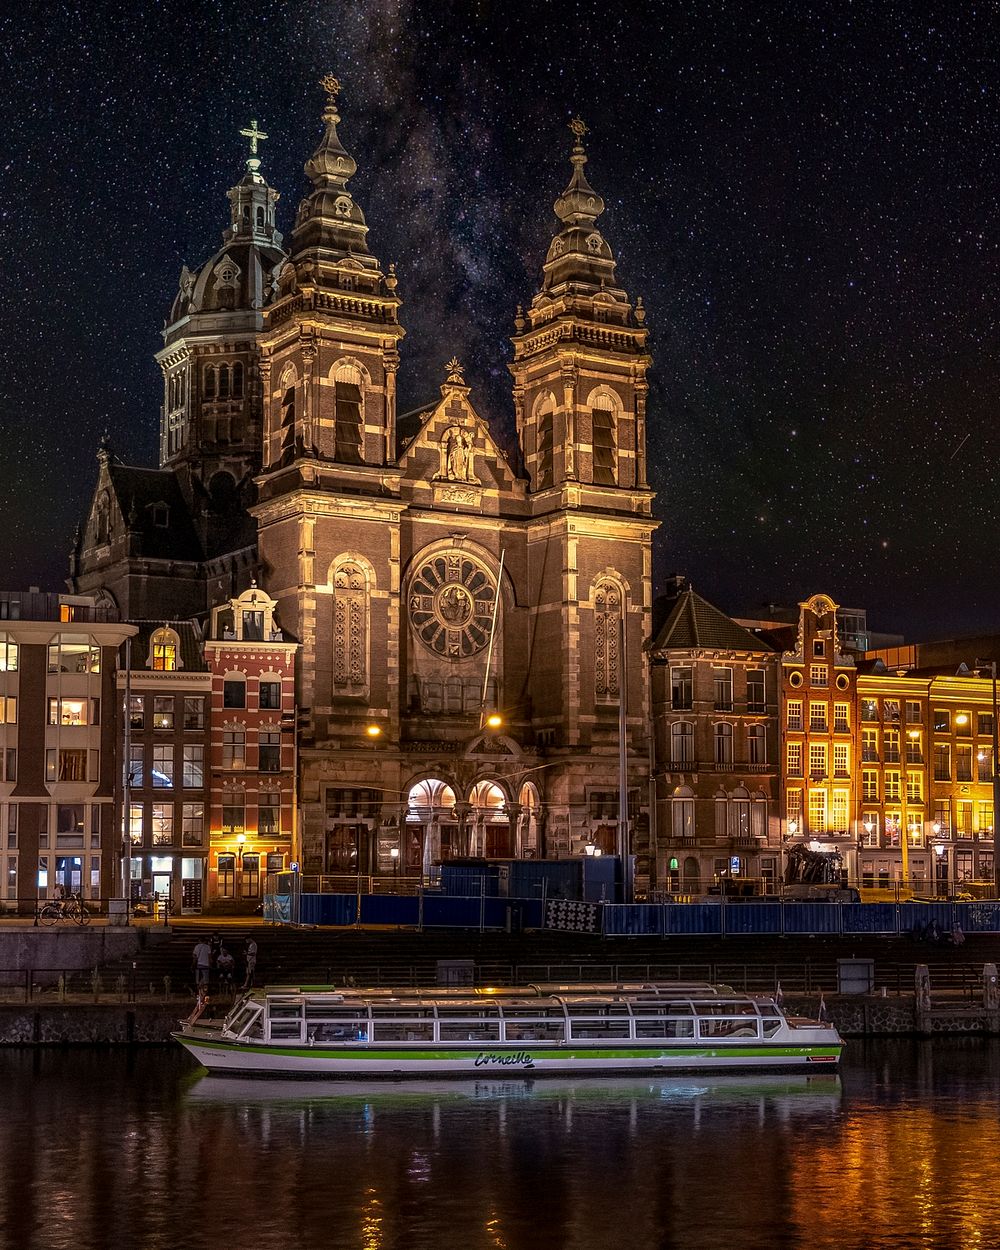 Basilica of Saint Nicholas, Amsterdam